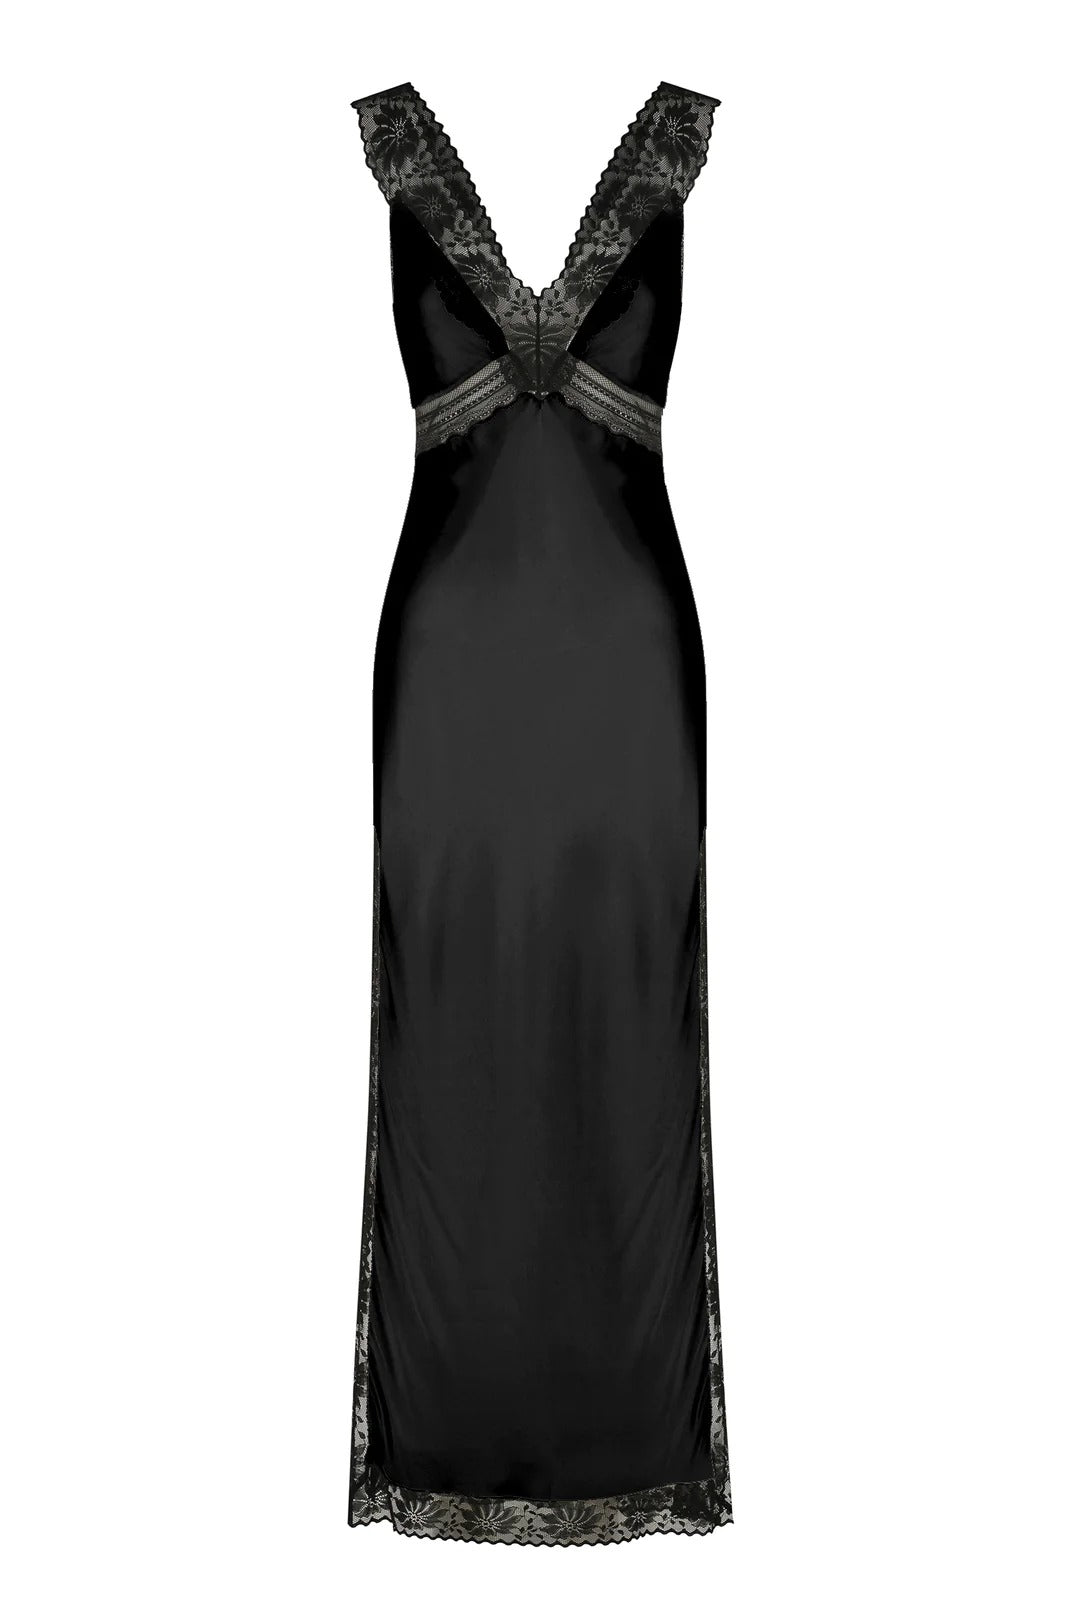 Maybelle Dress // Black